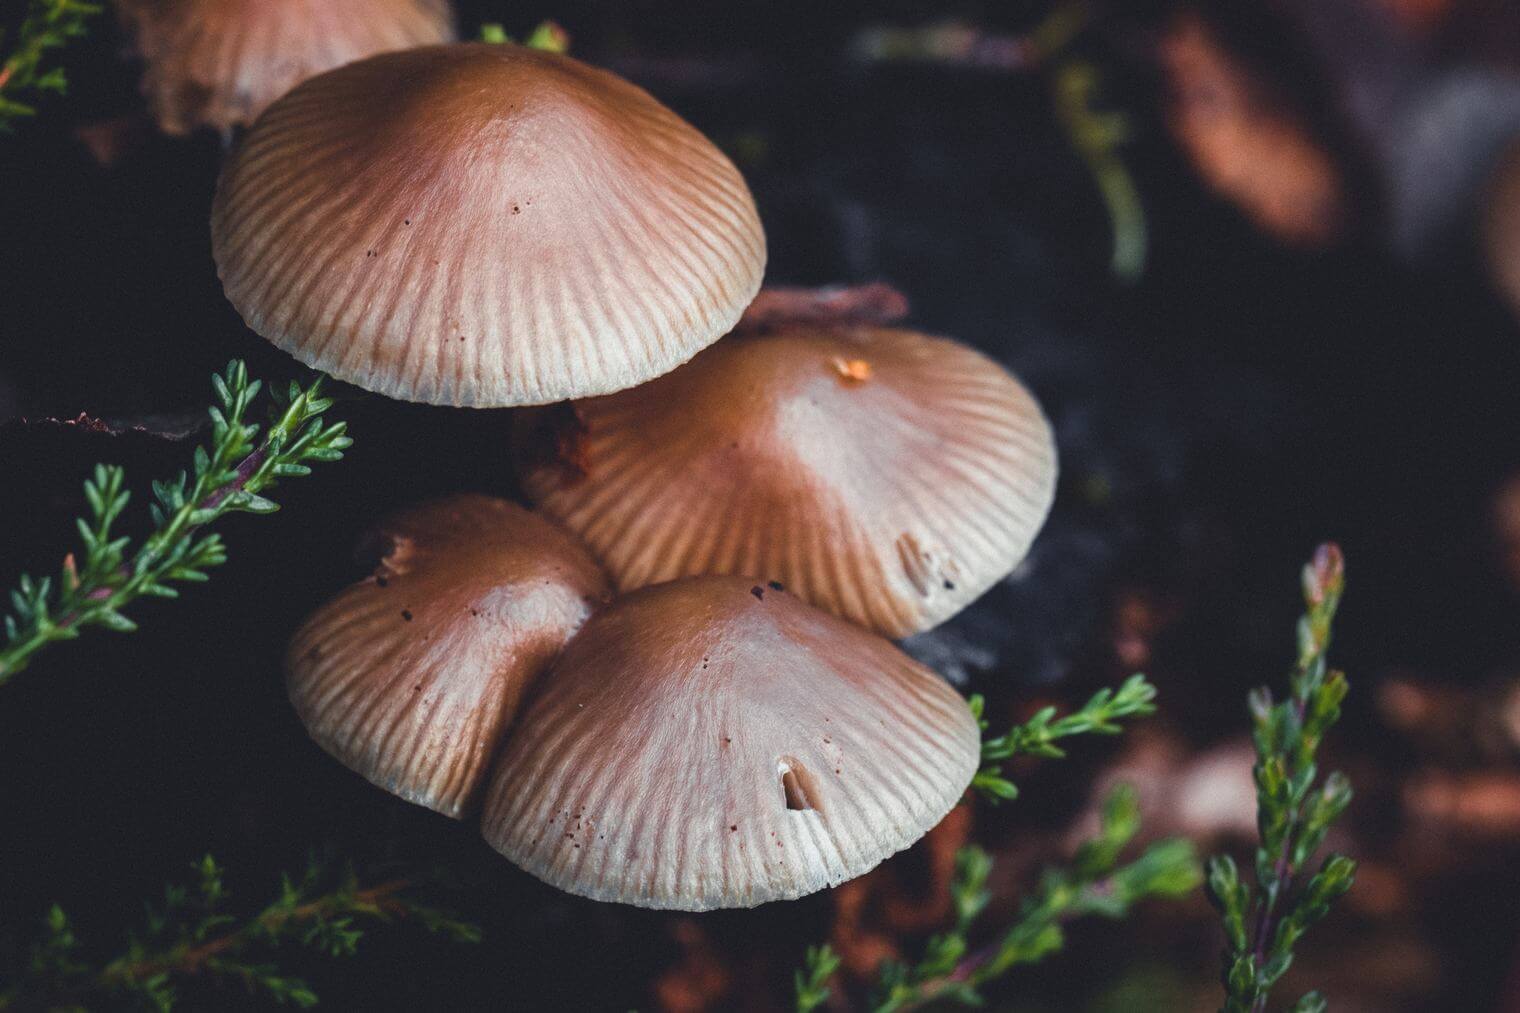 Mushrooms in Moody Colors